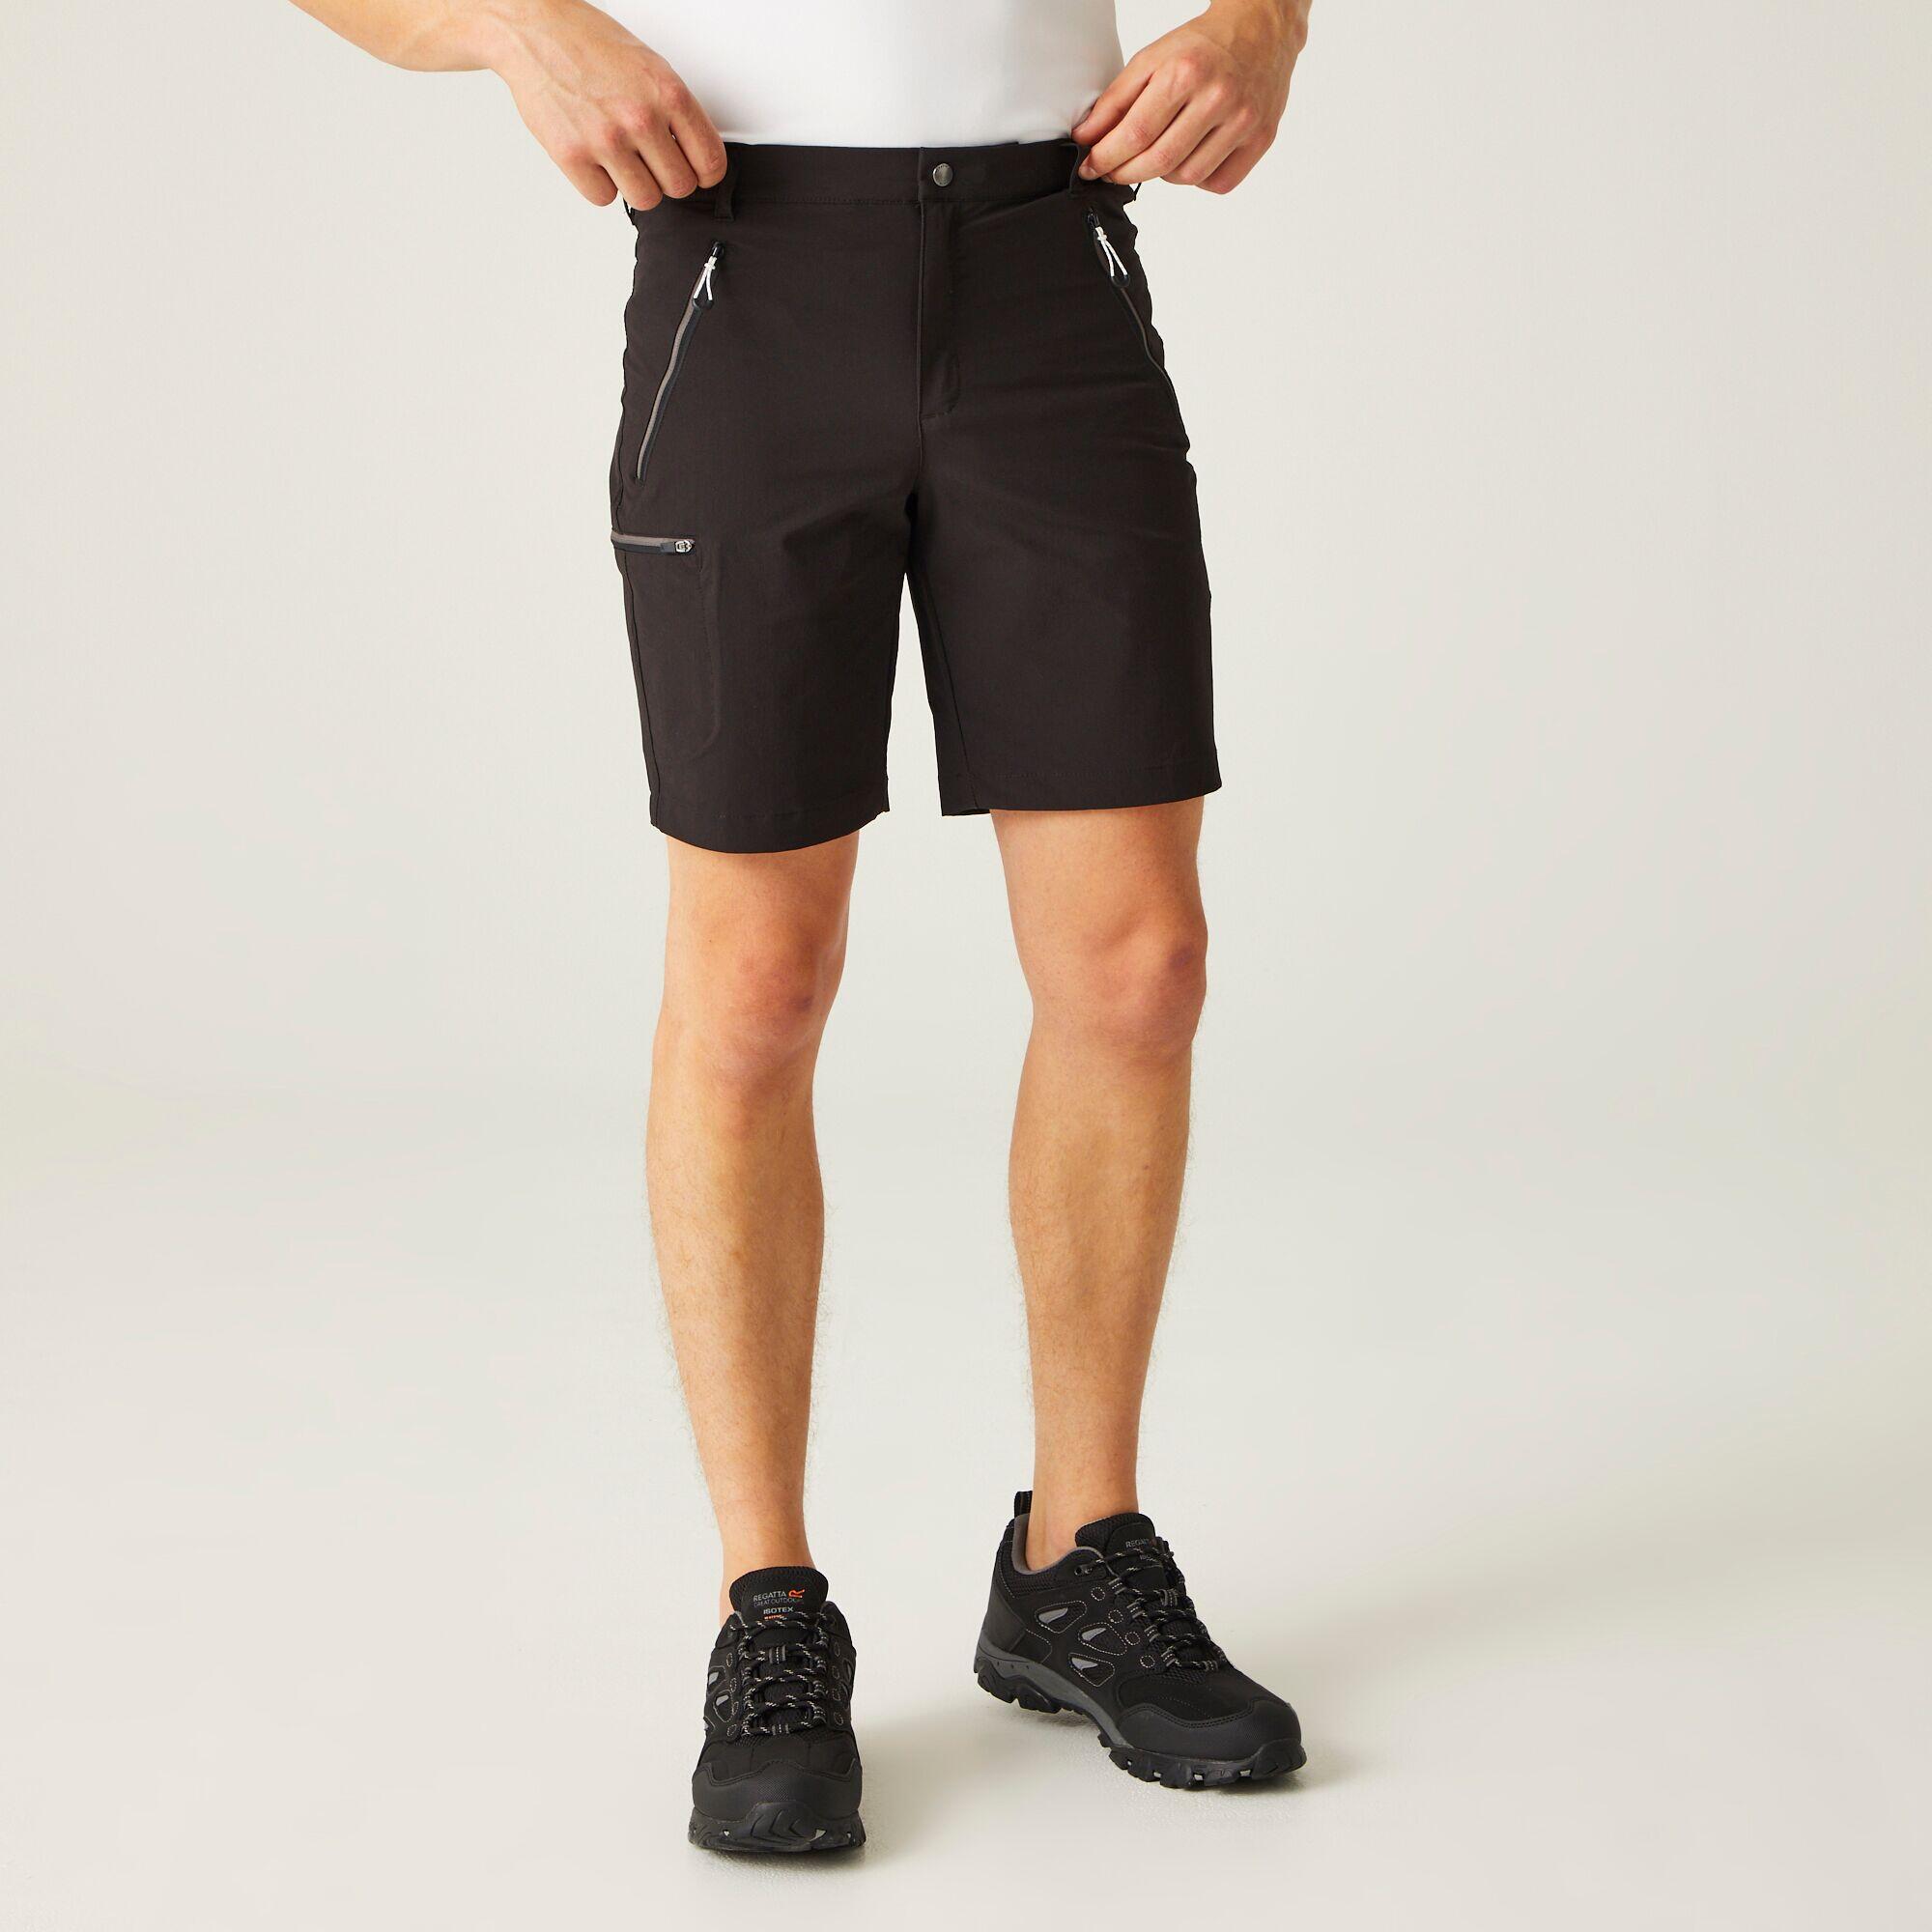 REGATTA Xert Stretch III Men's Hiking Shorts - Black